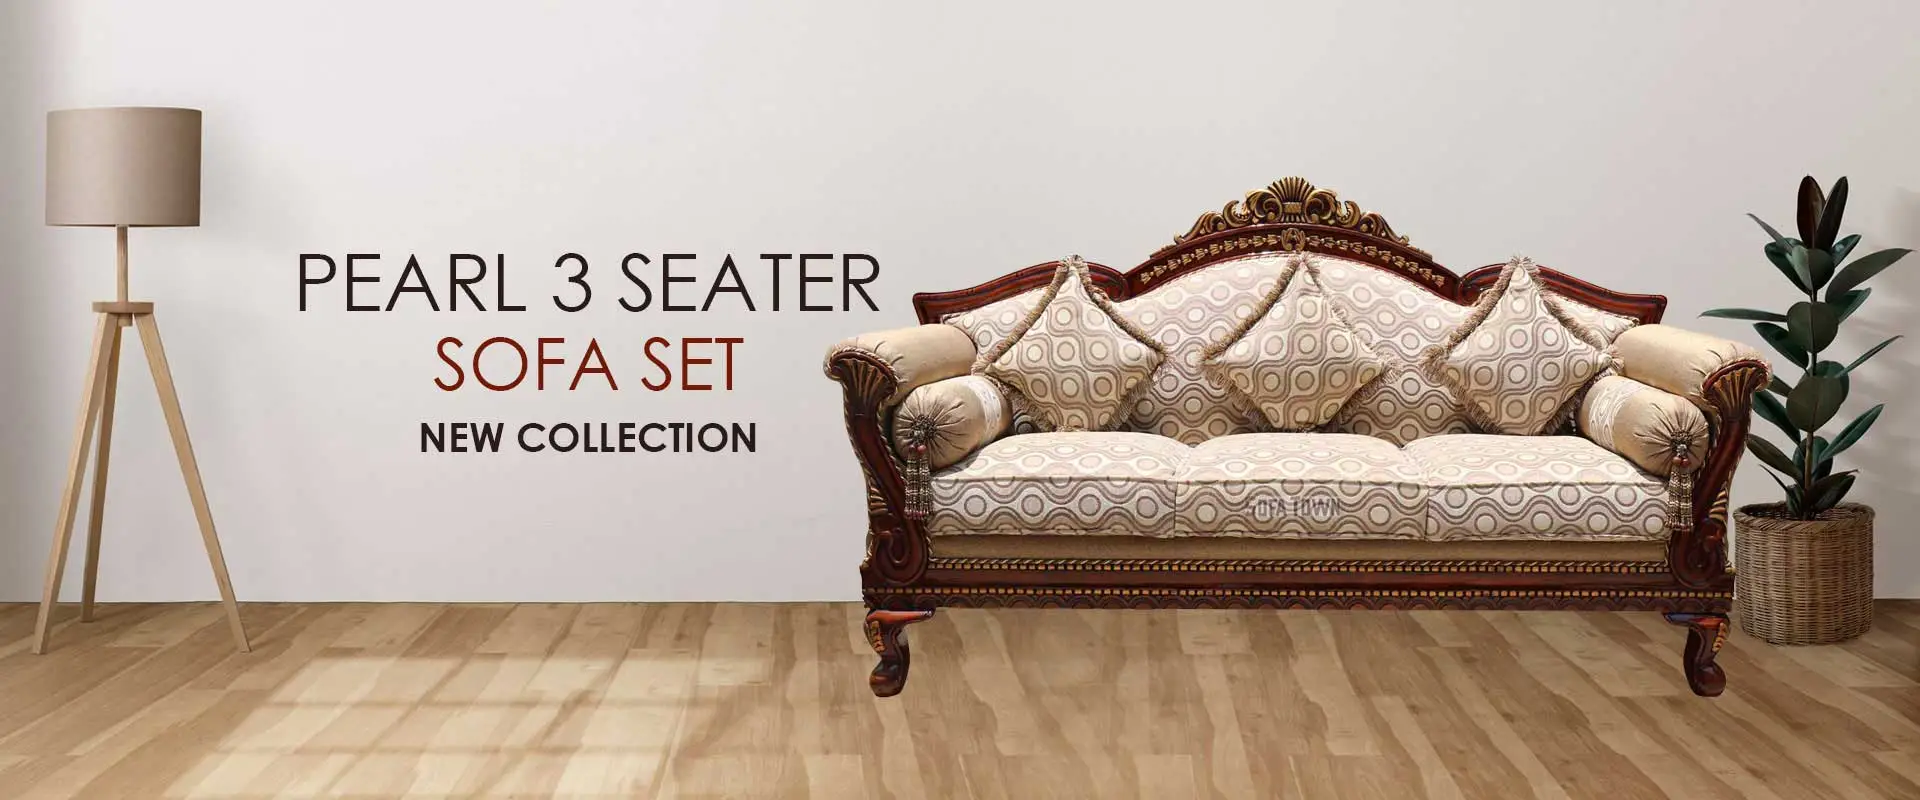 Pearl 3 Seater Sofa Set  Manufacturers in Godda